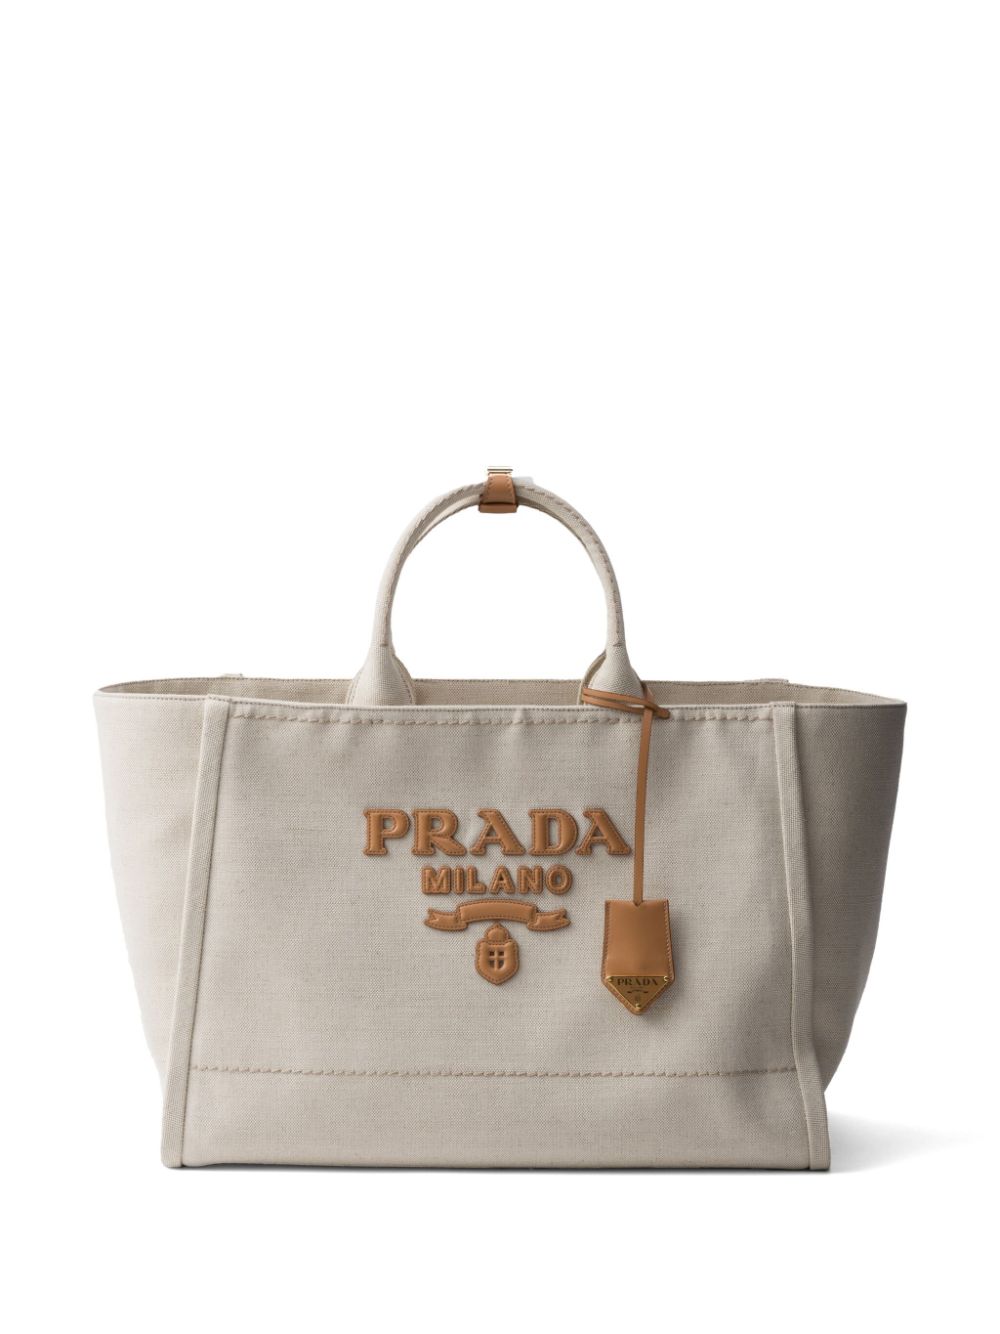 Prada Linen Tote Bag In Gold